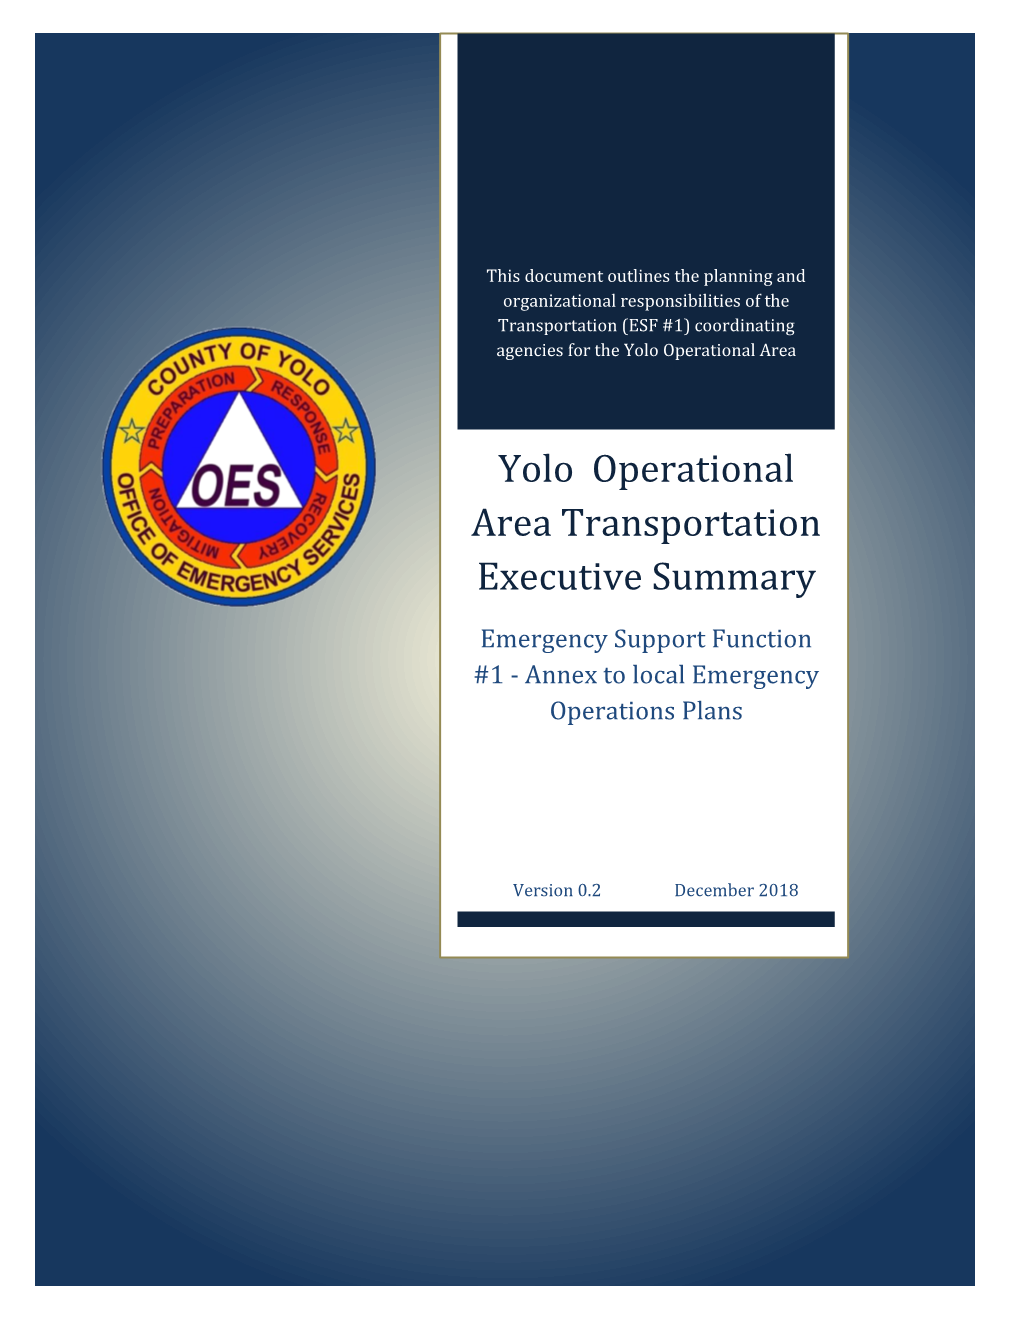 Yolo Operational Area Transportation Executive Summary